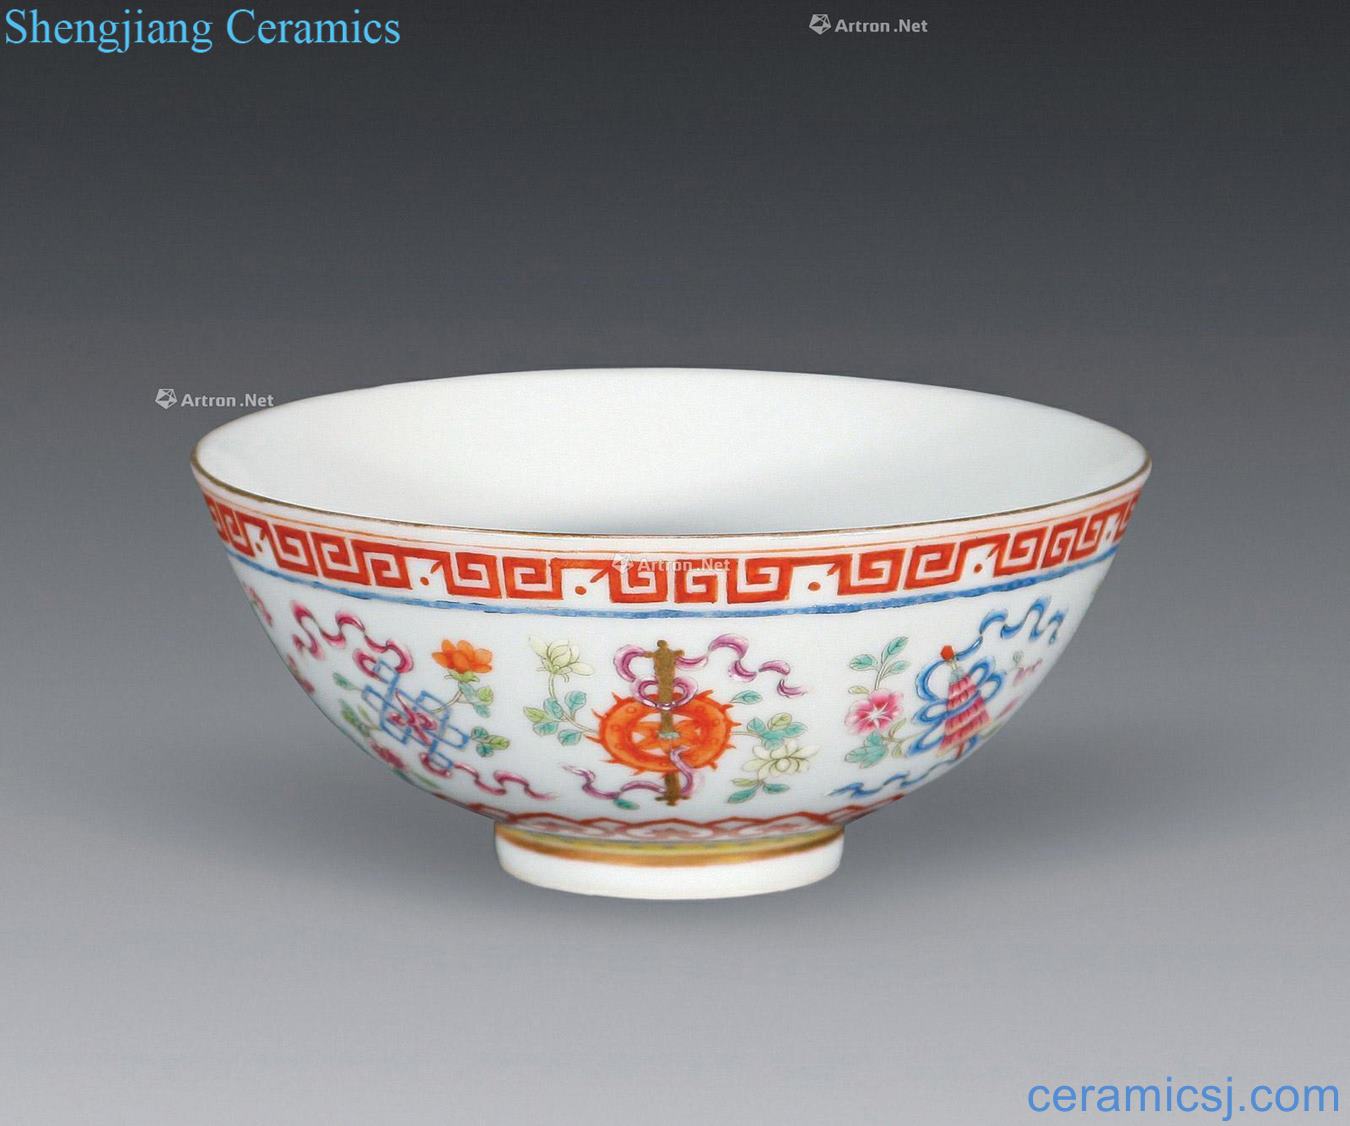 Pastel reign of qing emperor guangxu sweet green-splashed bowls